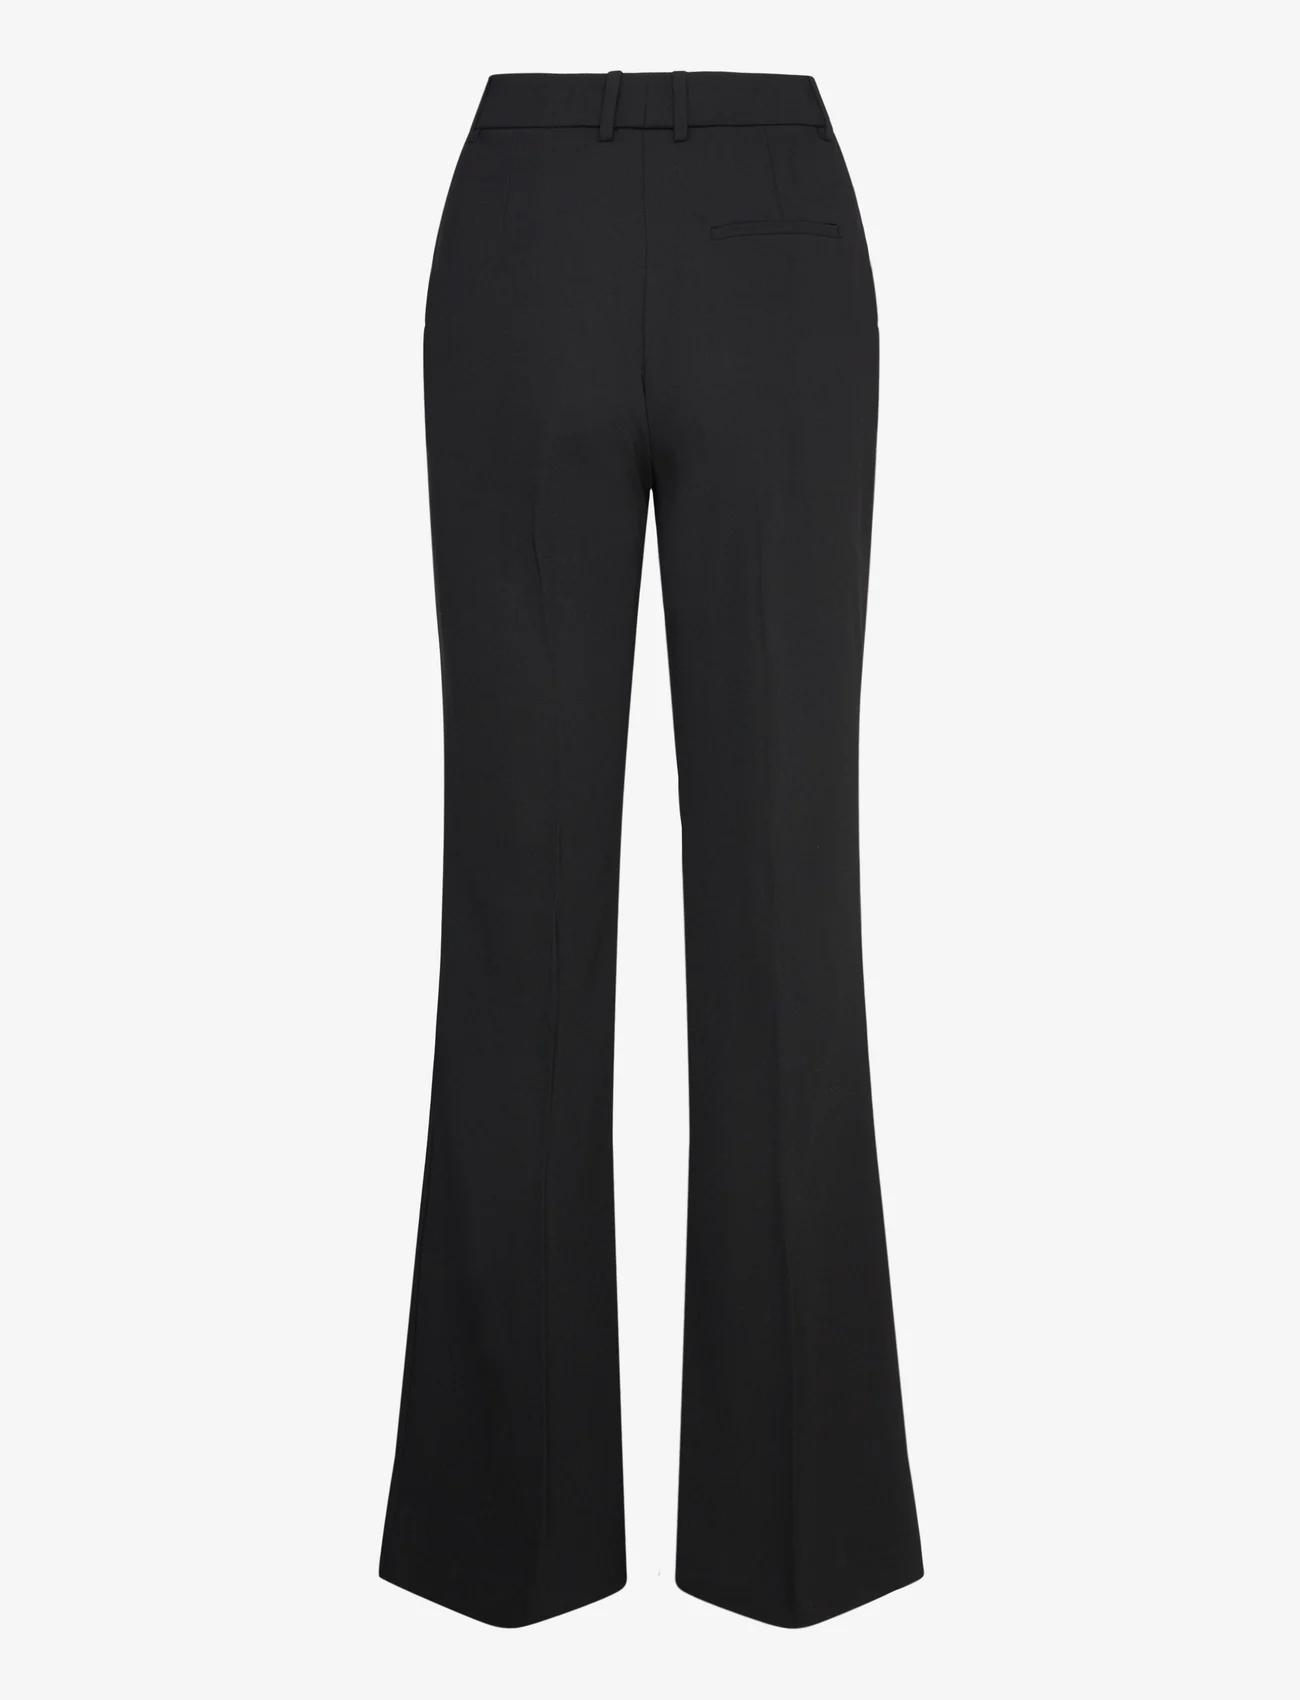 Mango - Flared trouser suit - puvunhousut - black - 1